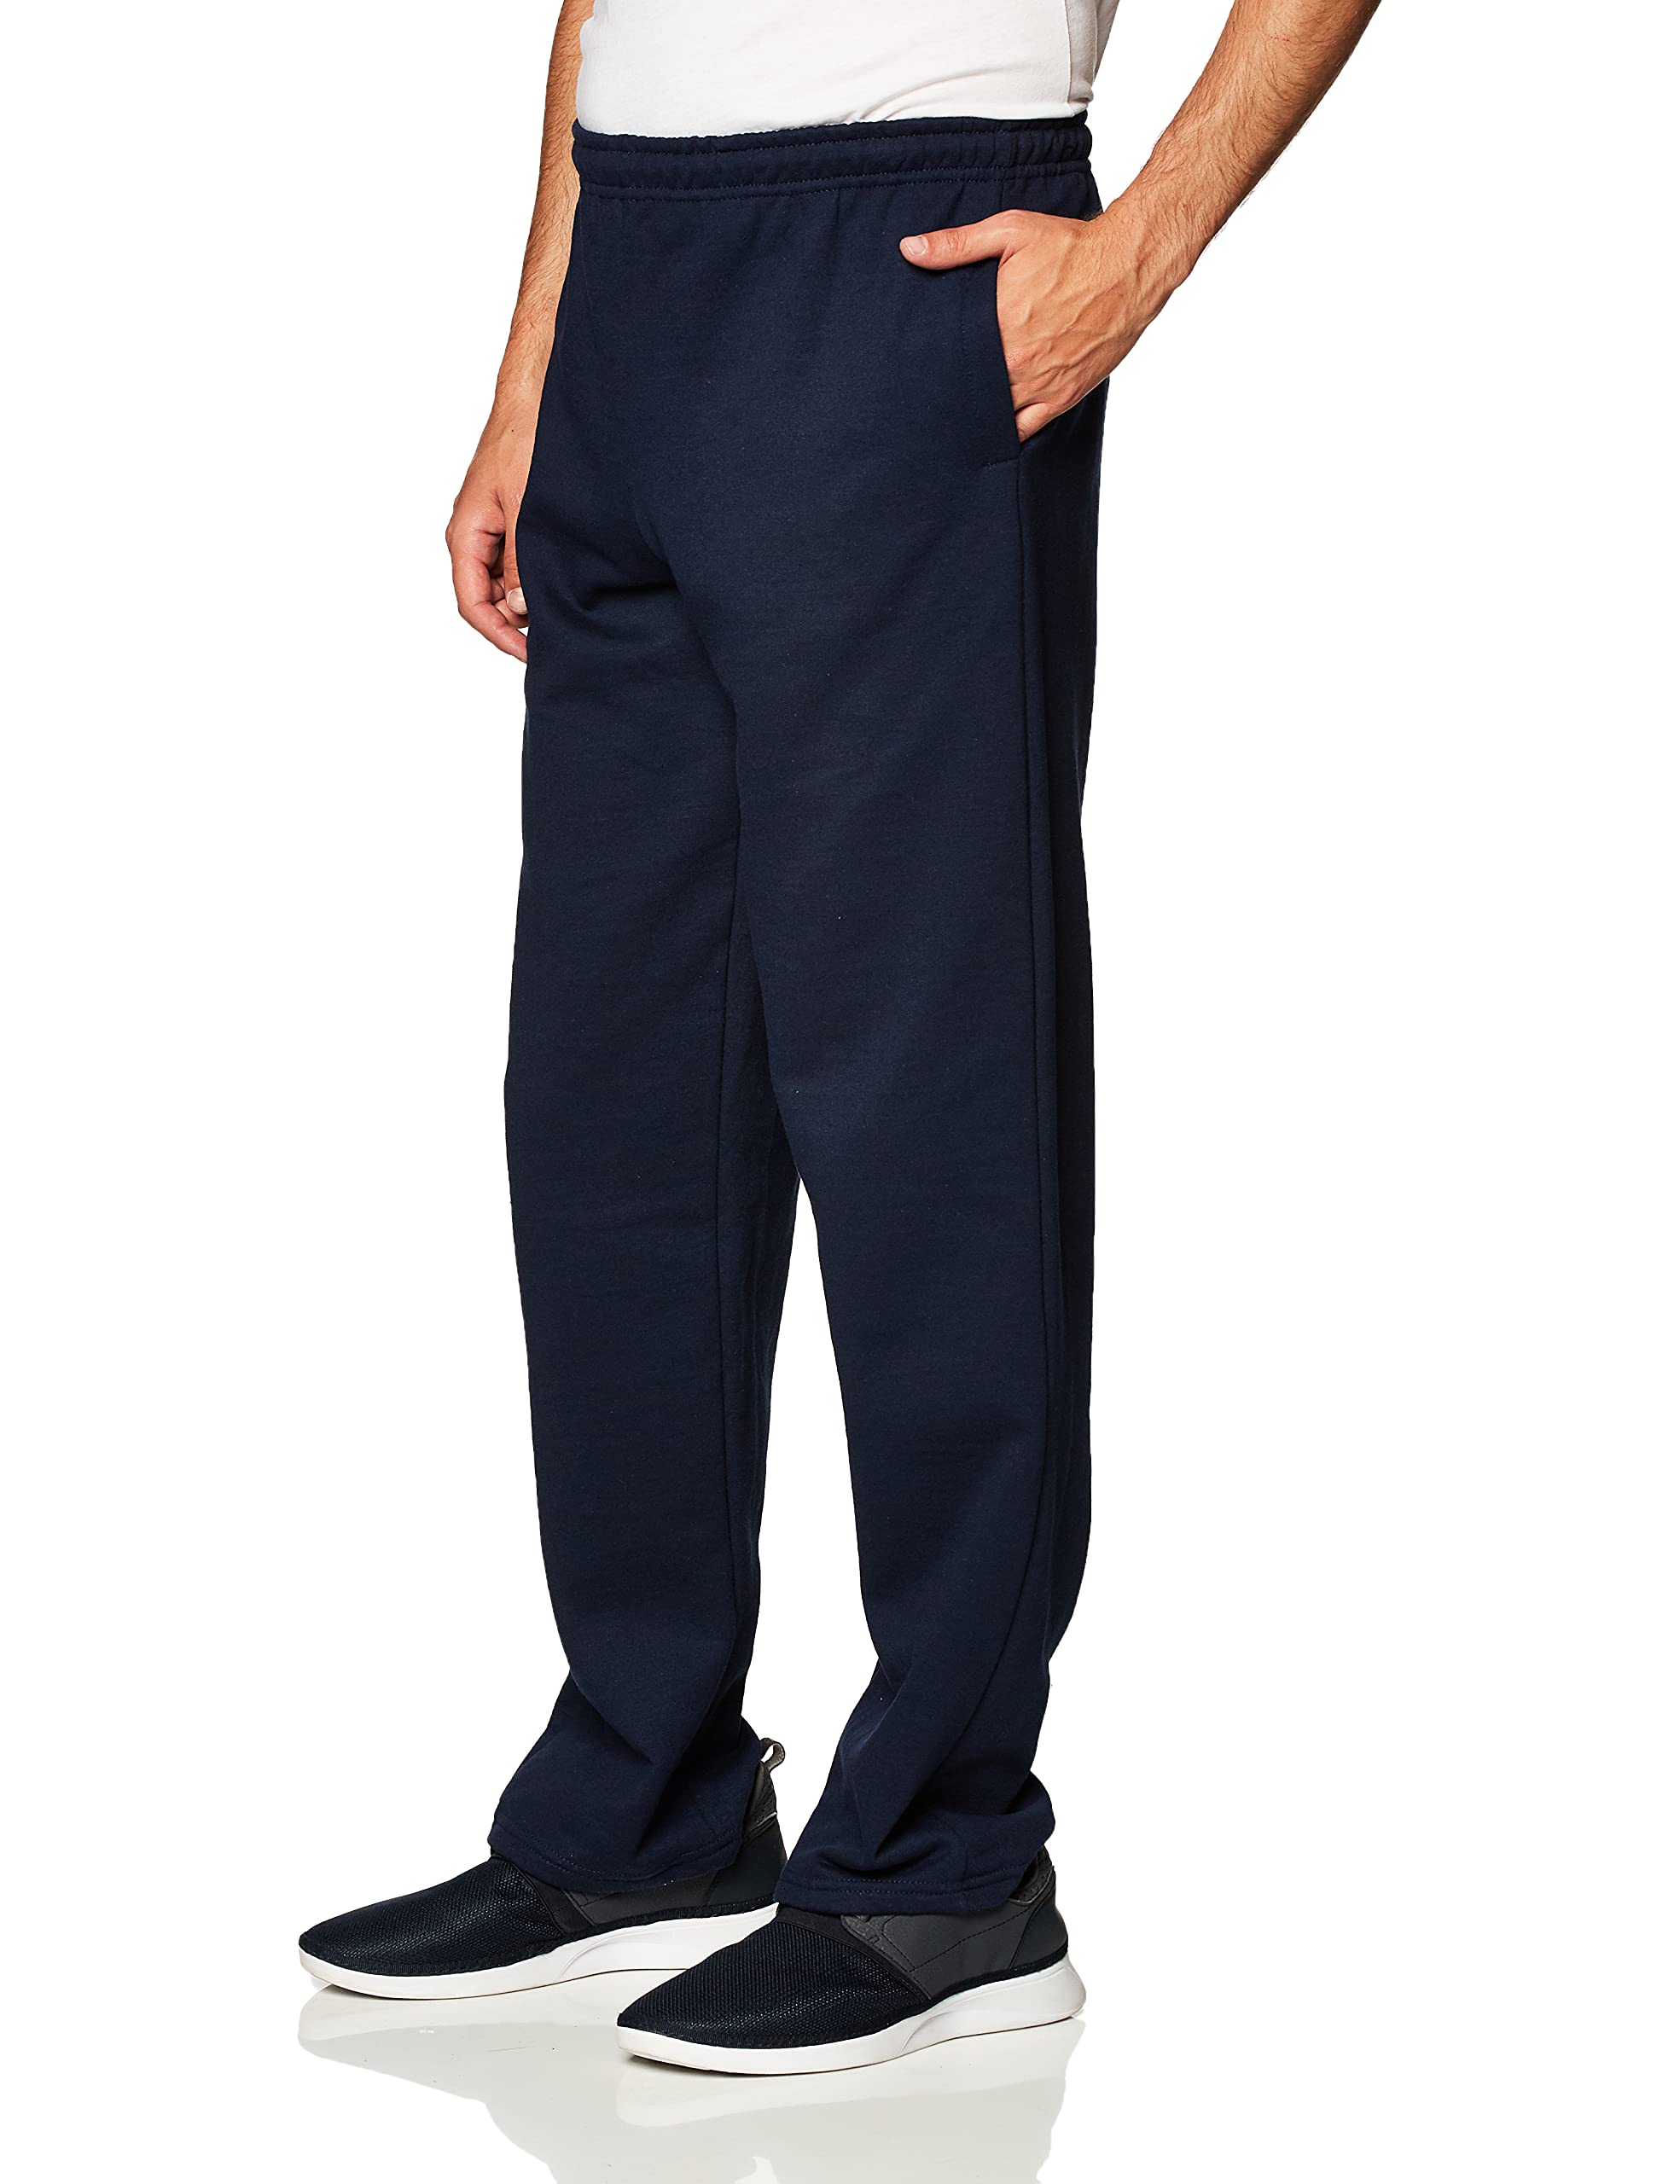 Gildan Adult Fleece Open Bottom Sweatpants with Pockets, Style G18300, Navy, Medium